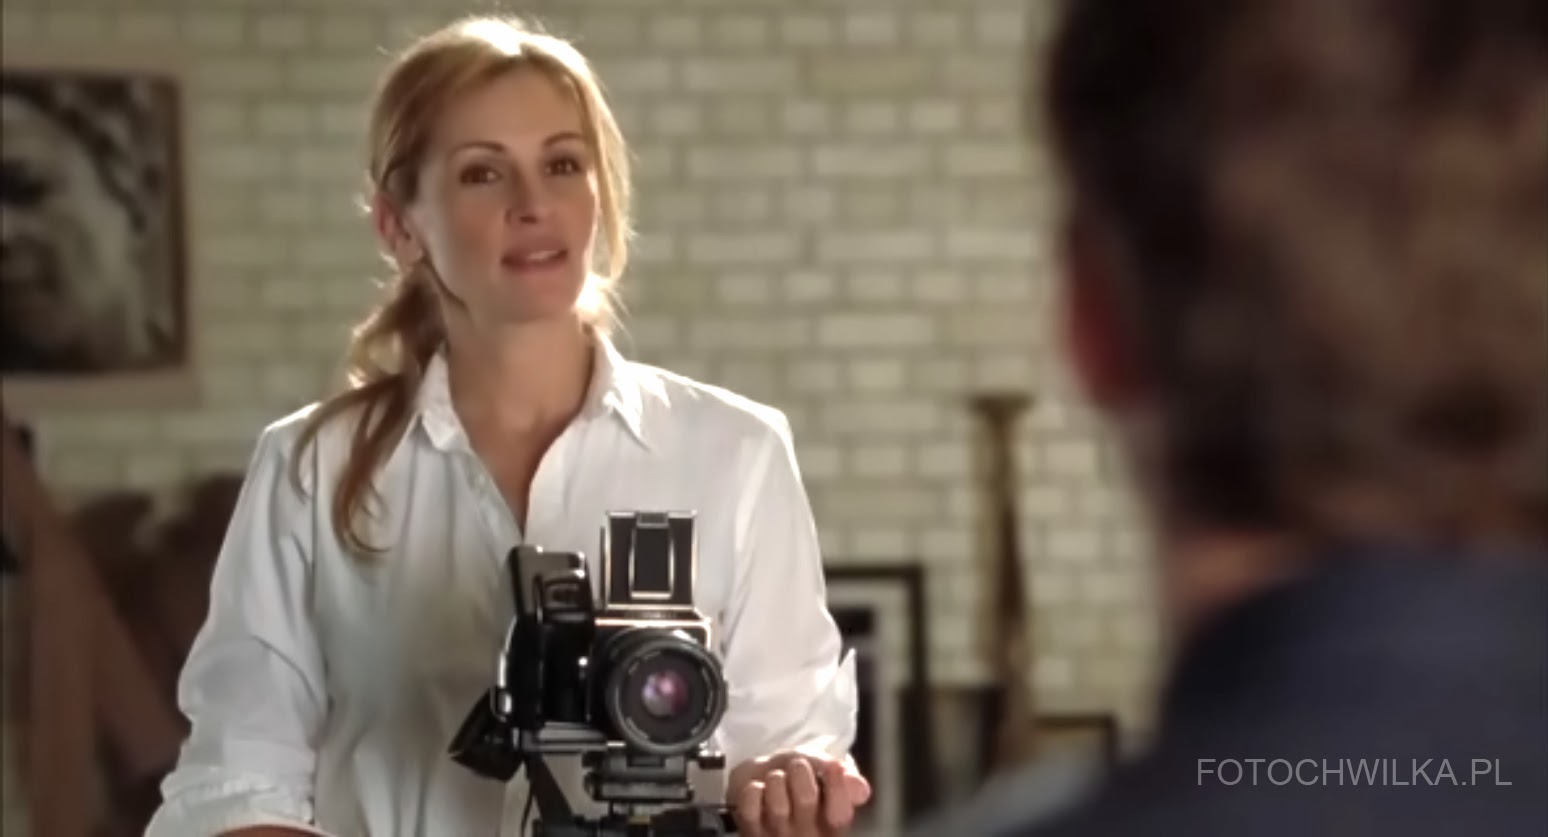 Scena z filmu "Bliżej" (Closer) - Julia Roberts jako fotograf